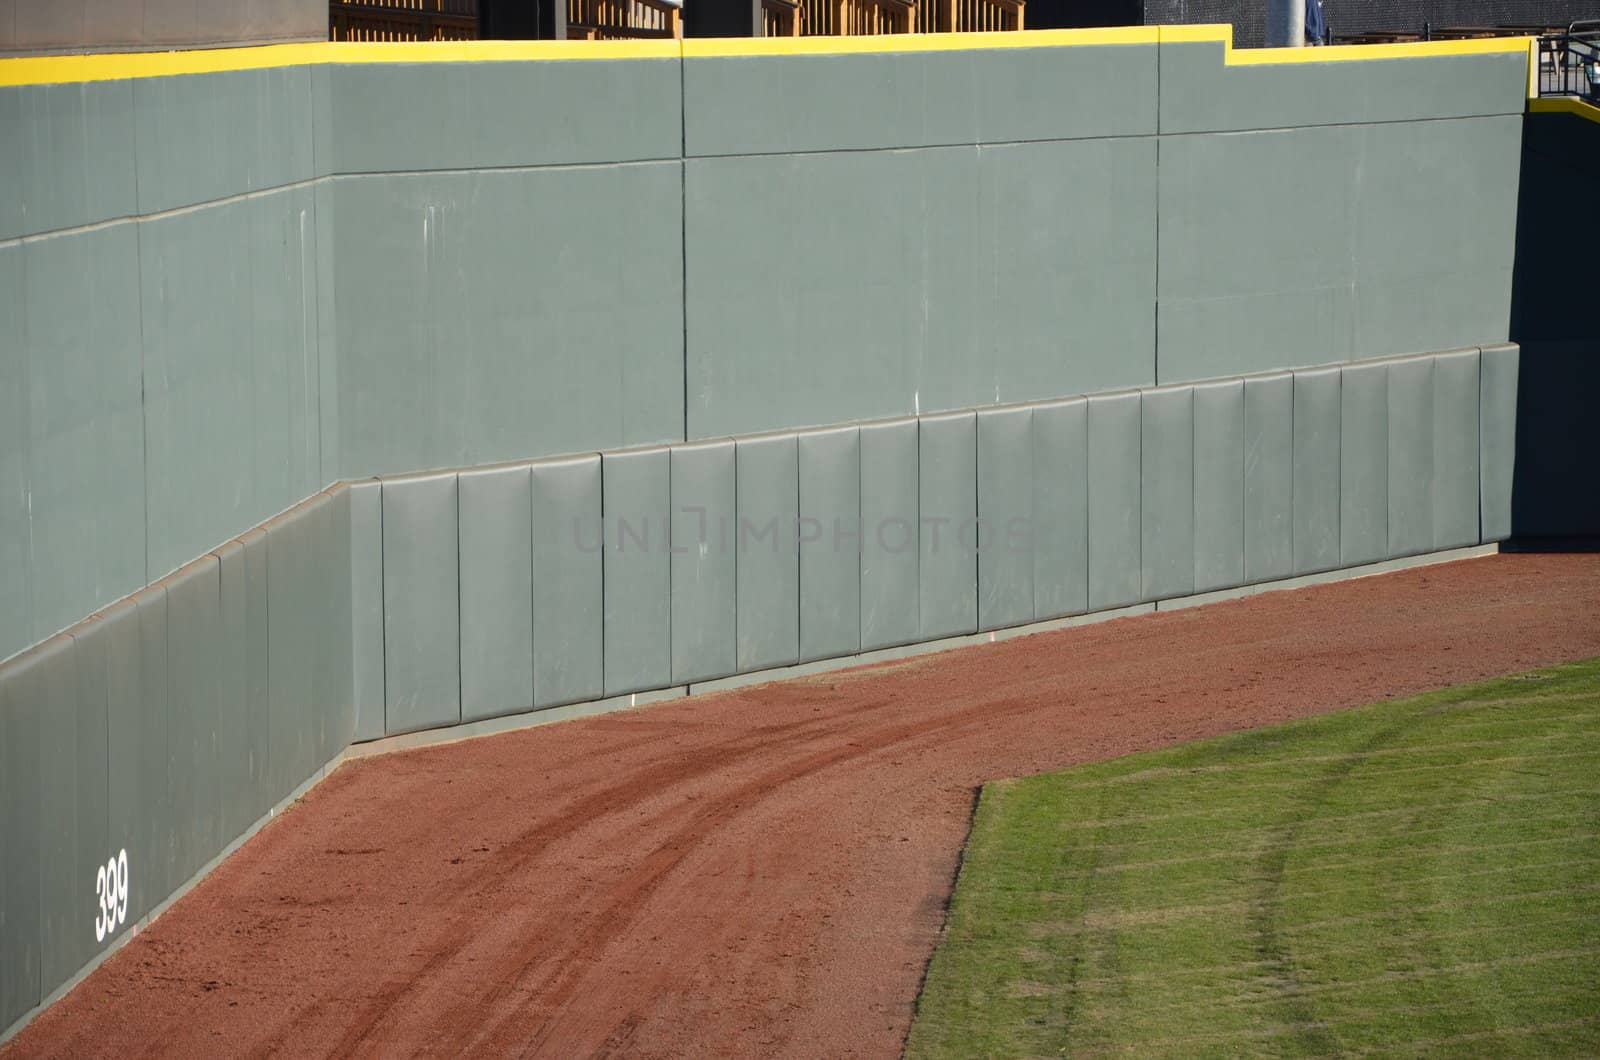 The wall at a baseball stadium. A high green fence